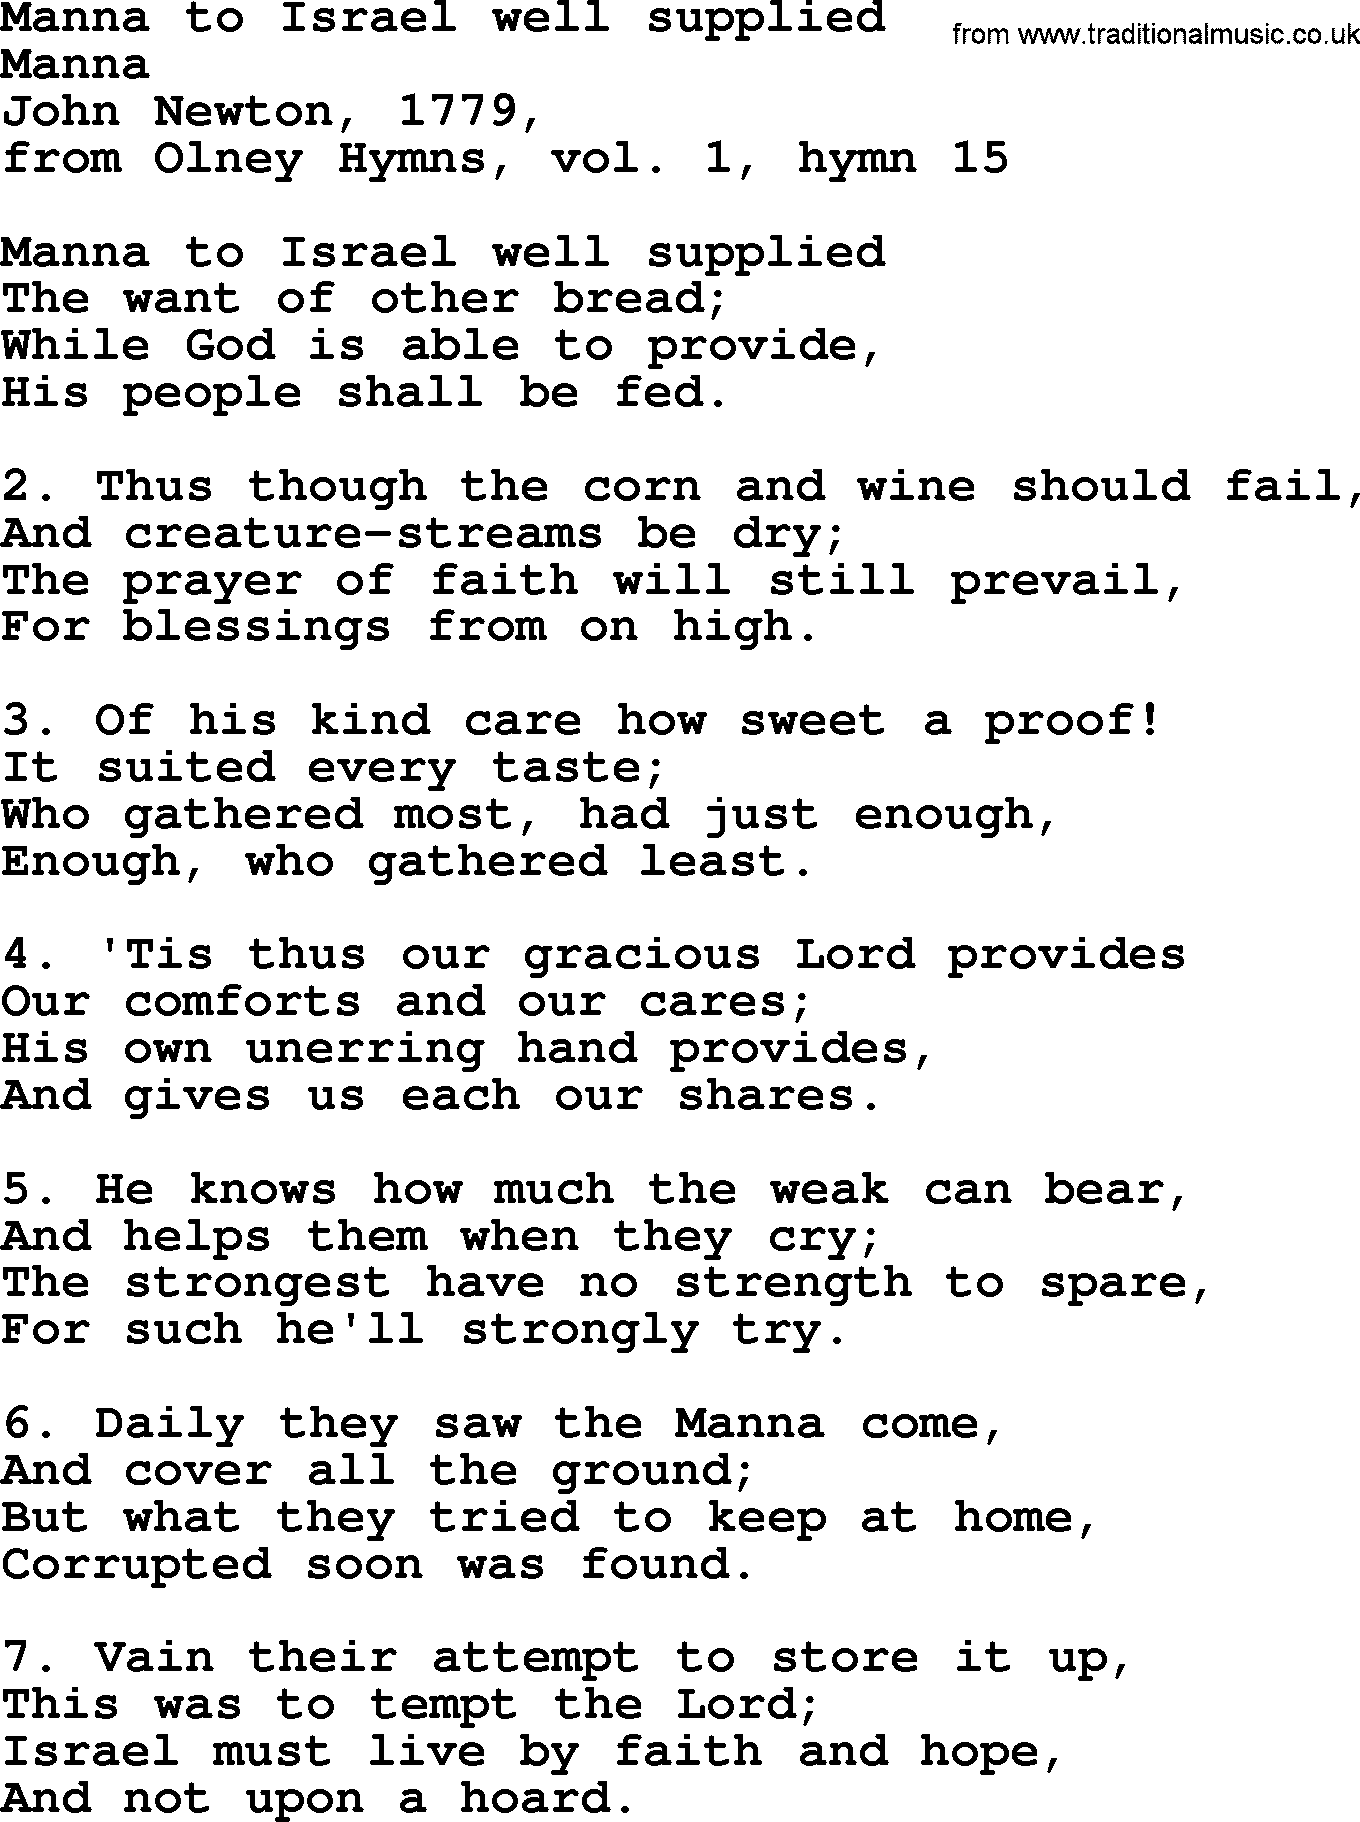 John Newton hymn: Manna To Israel Well Supplied, lyrics